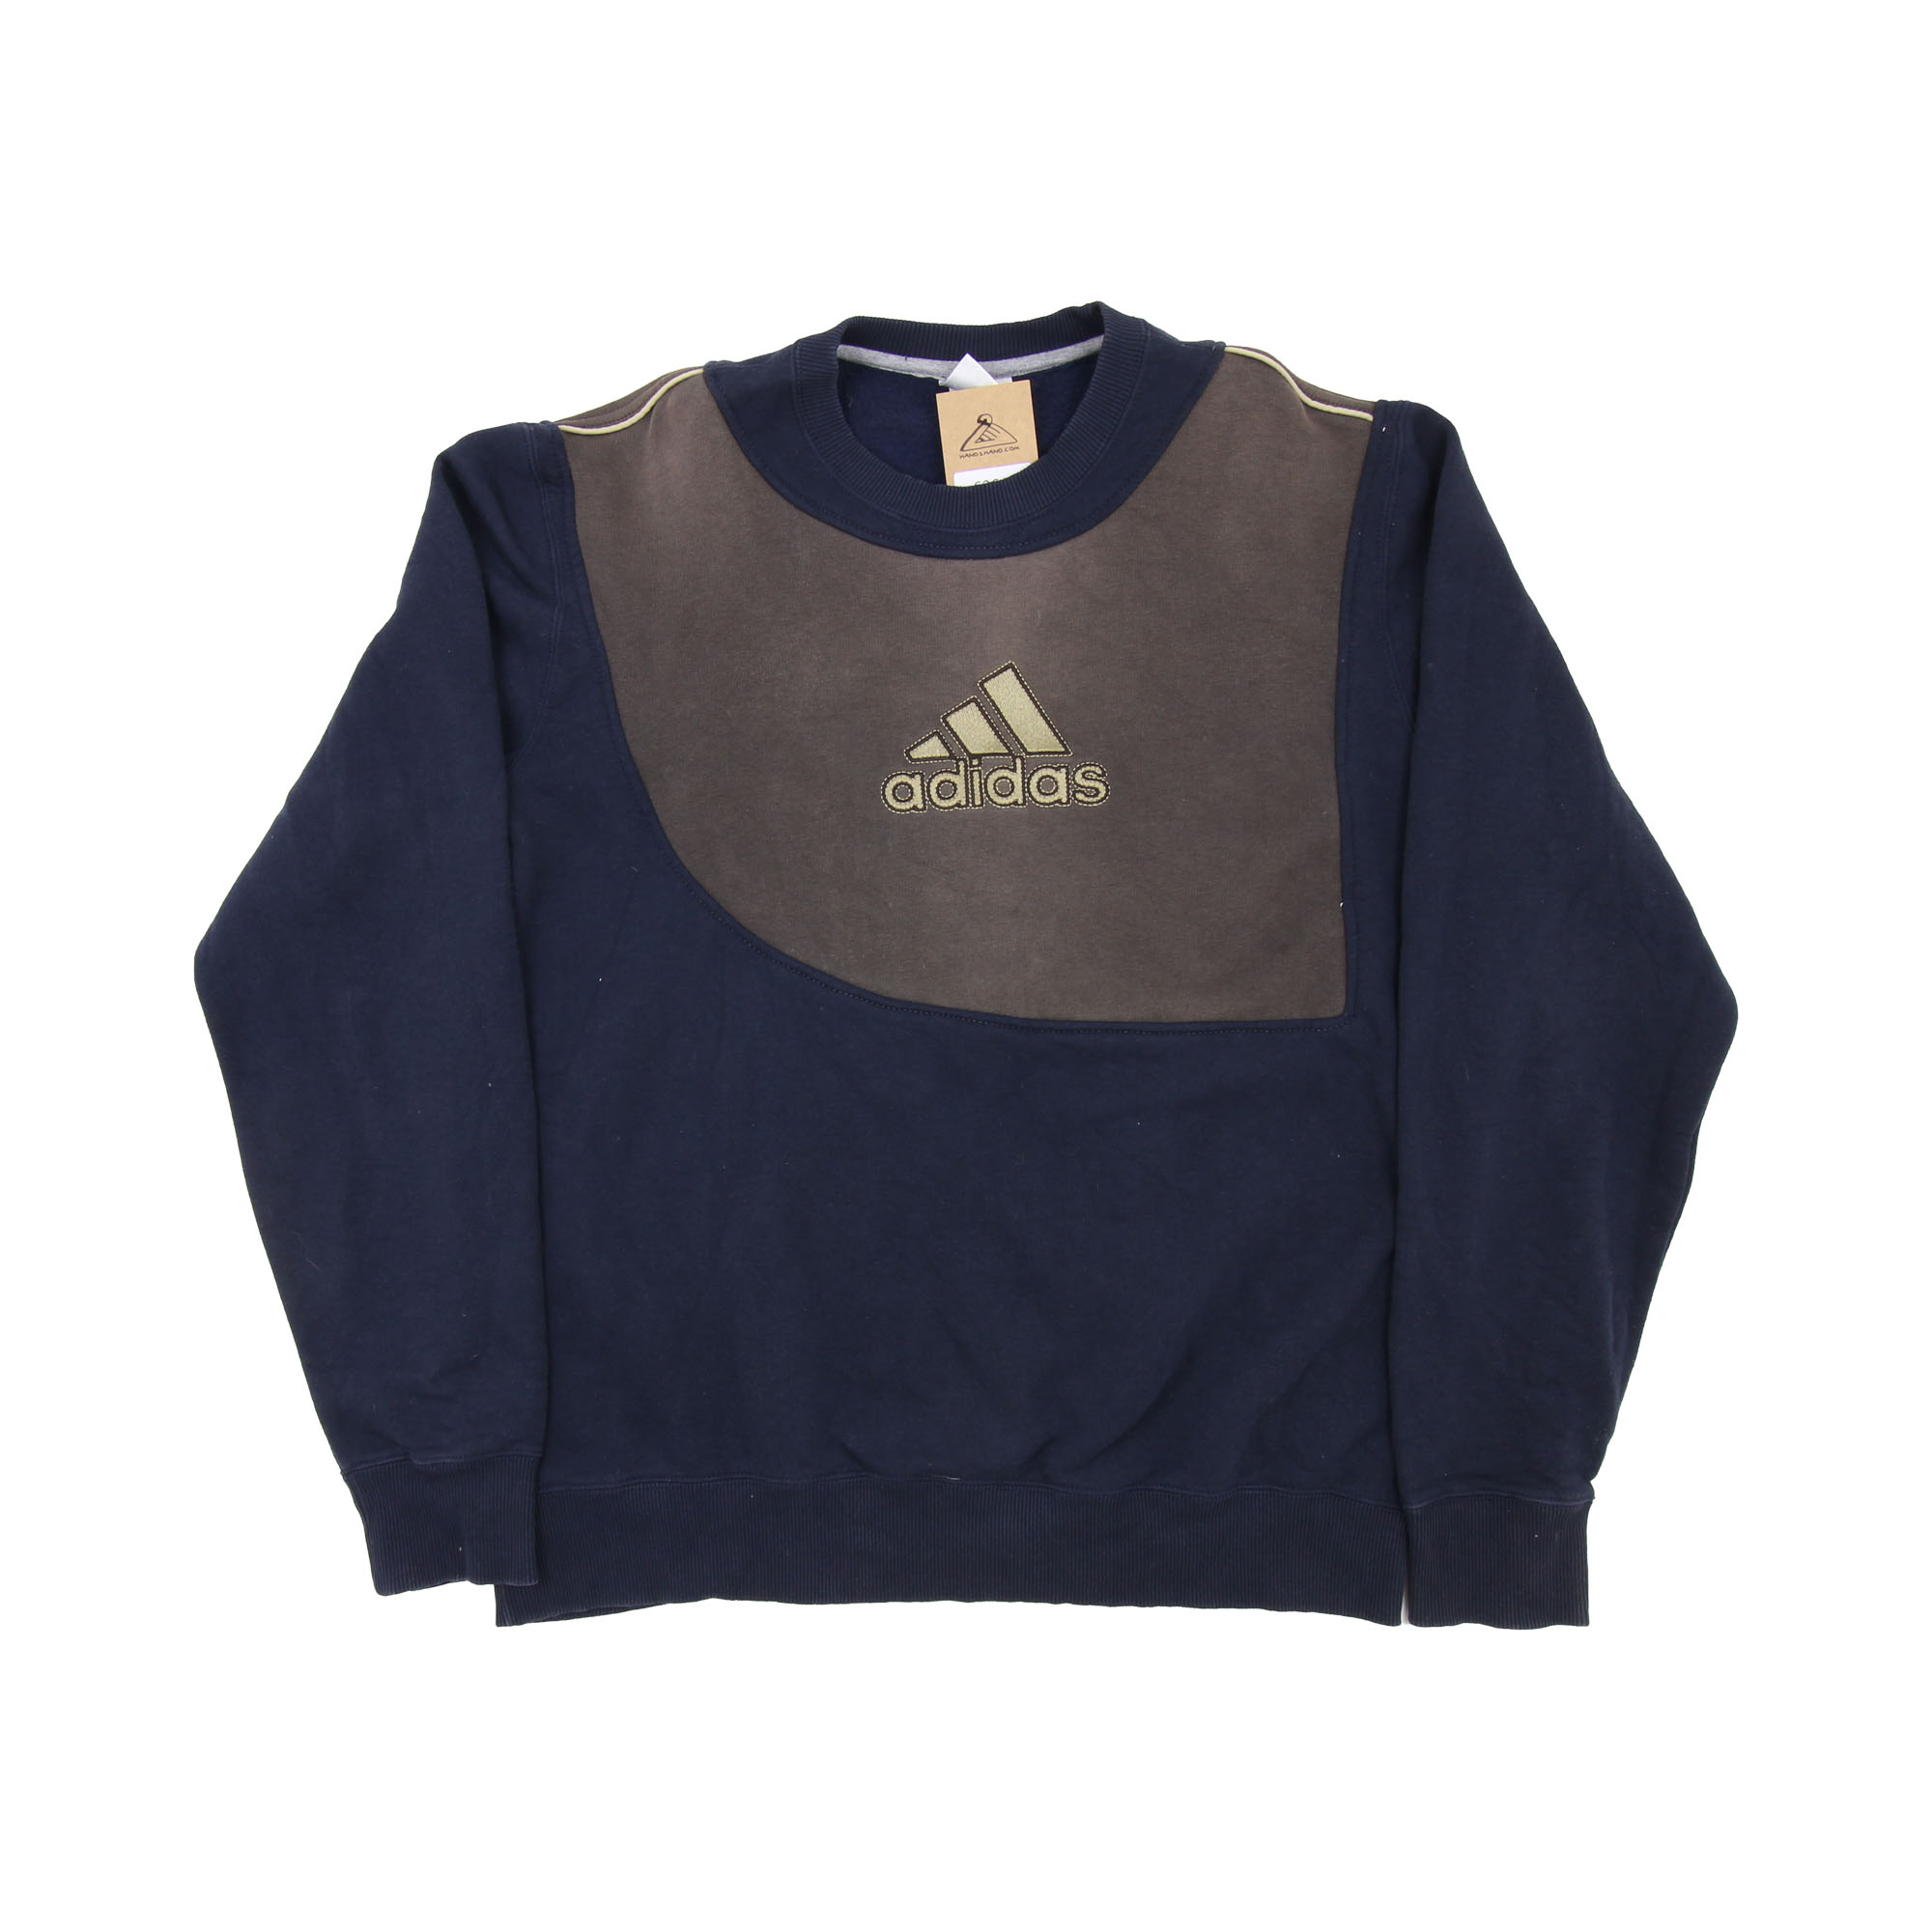 Adidas Rework Sweatshirt -  XL